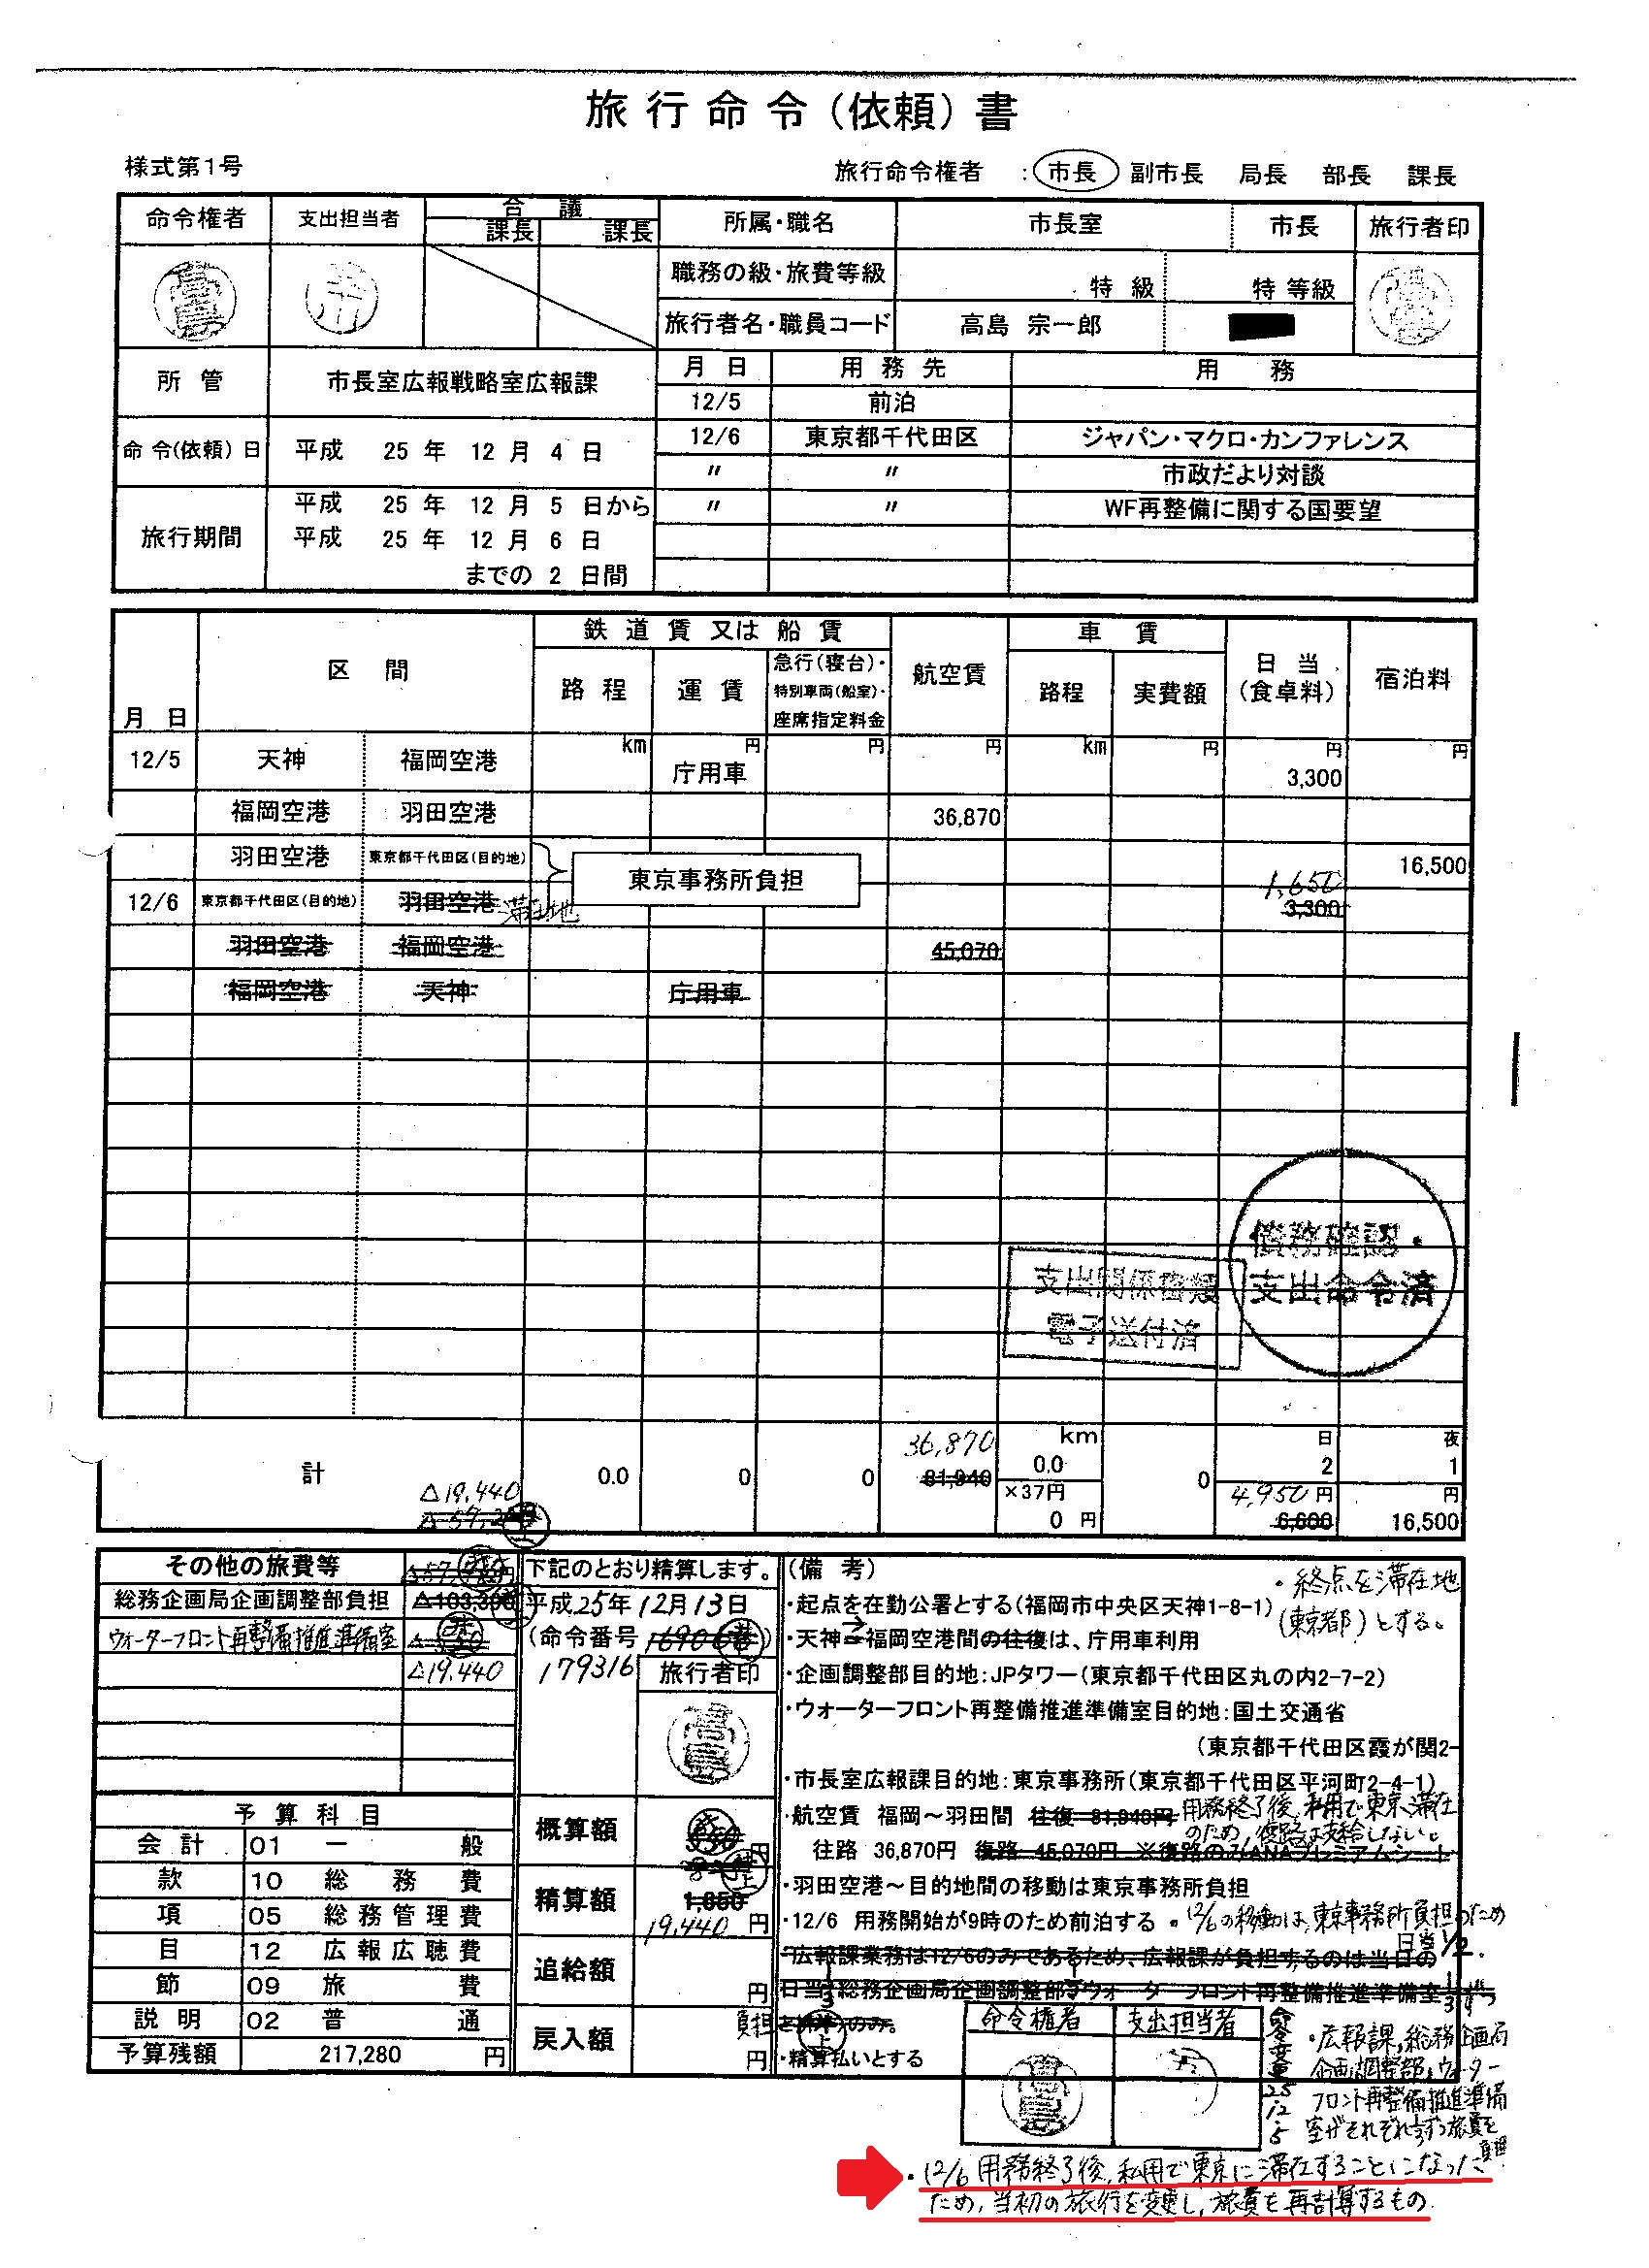 http://hunter-investigate.jp/news/2014/07/27/%E5%91%BD%E4%BB%A4%E6%9B%B8.jpg